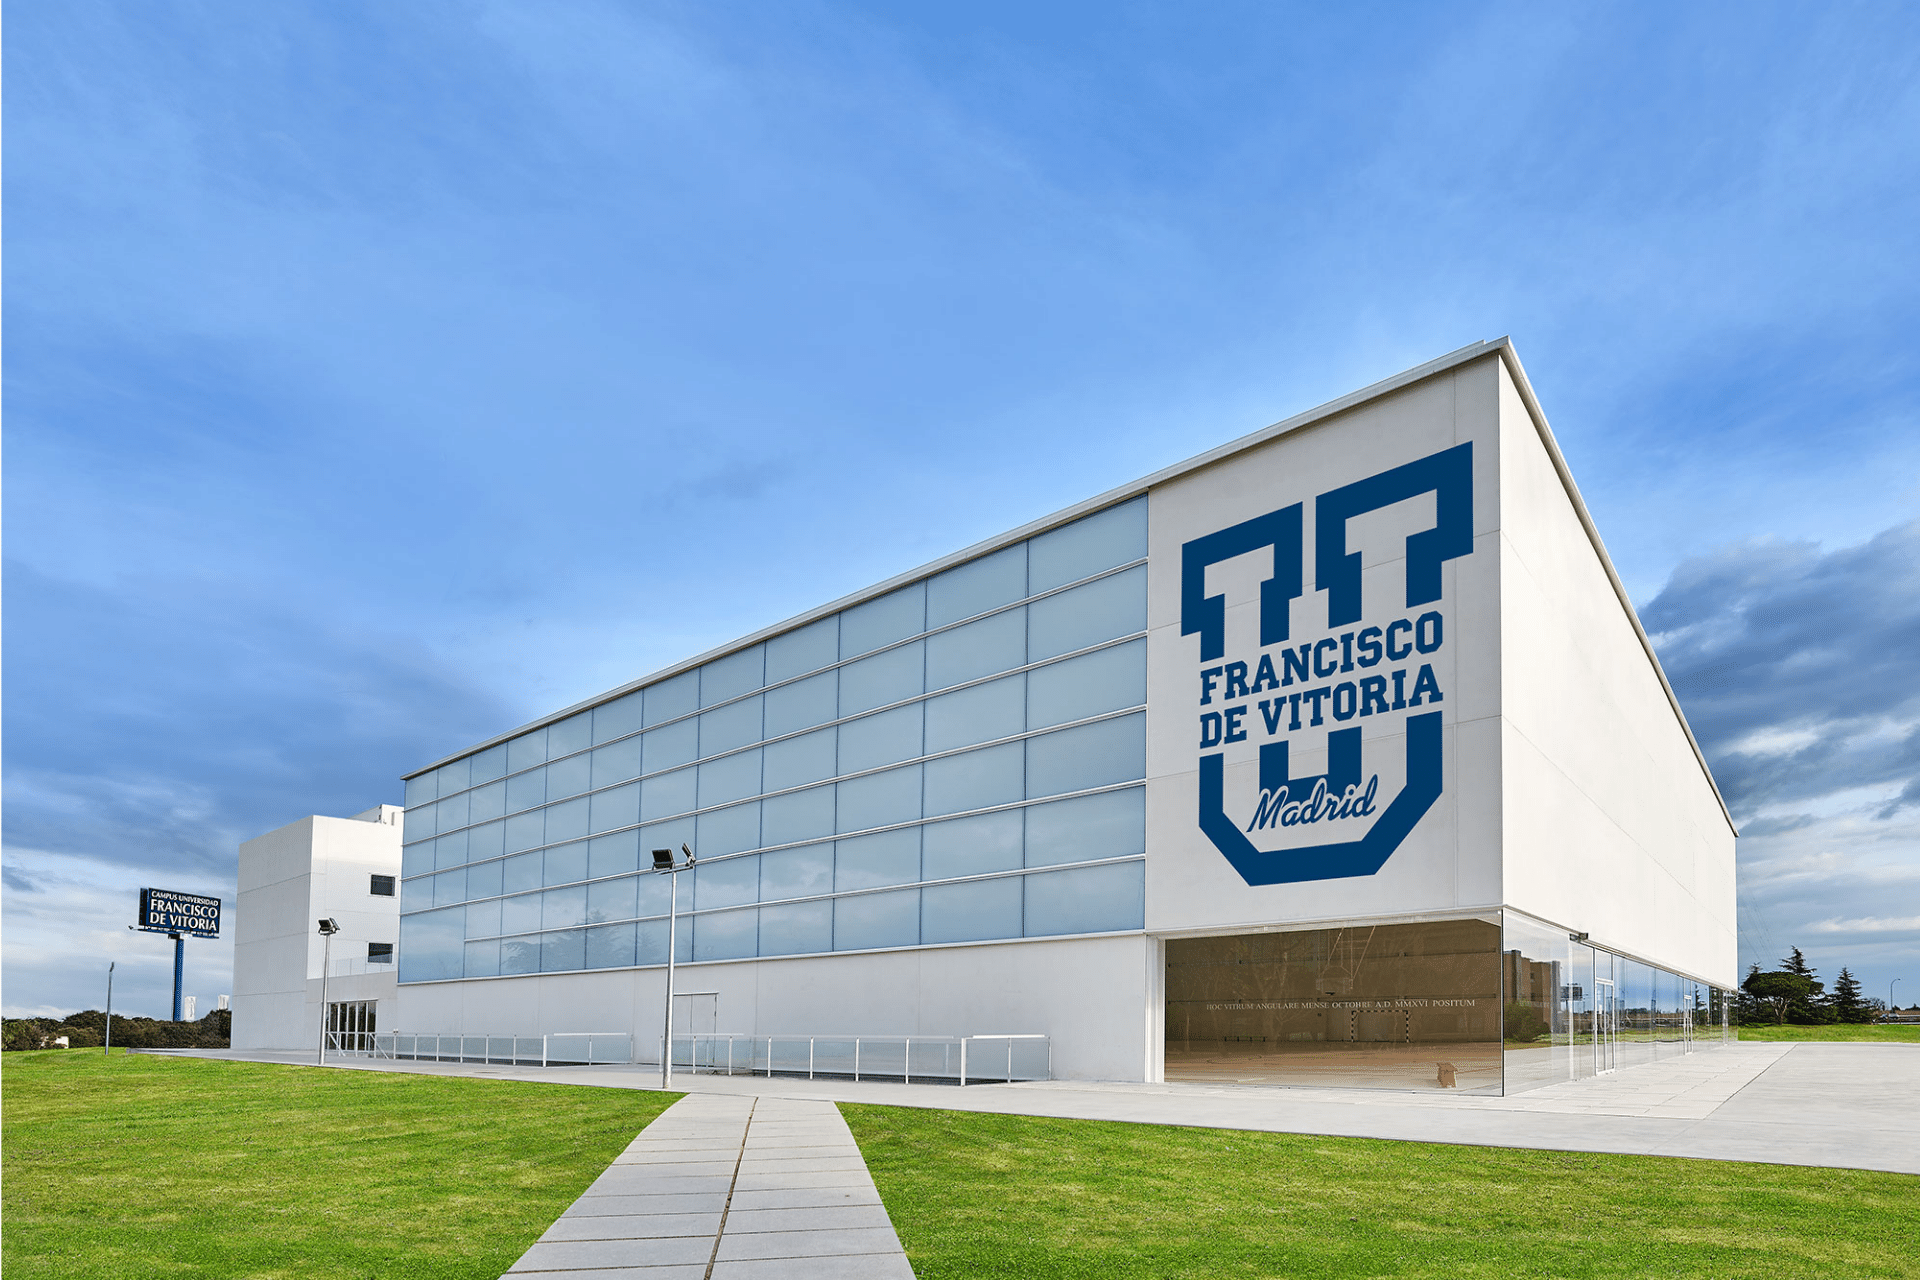 Information about the Francisco de Vitoria University